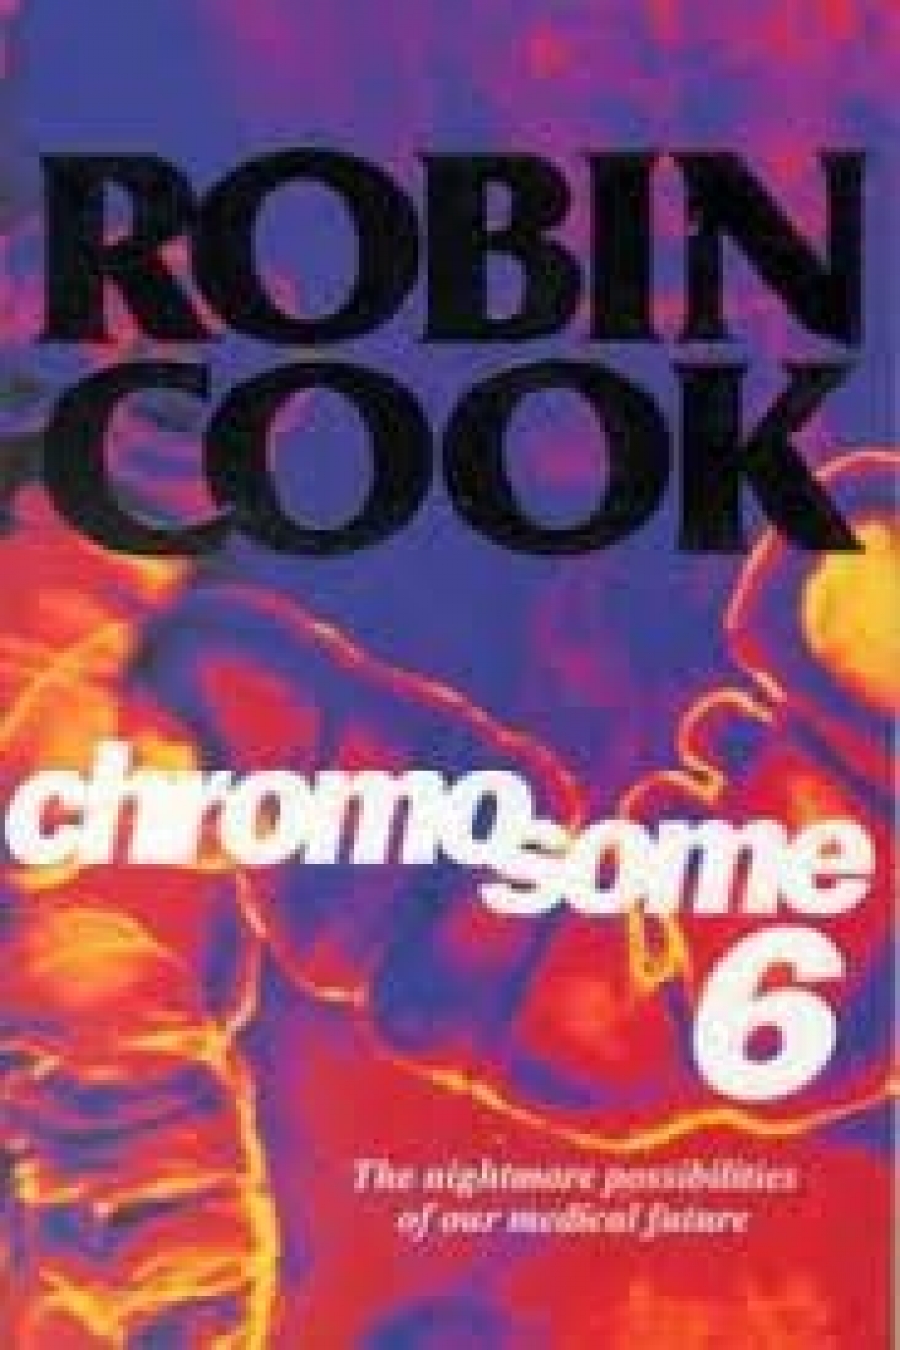 Cook, R Chromosome Six 